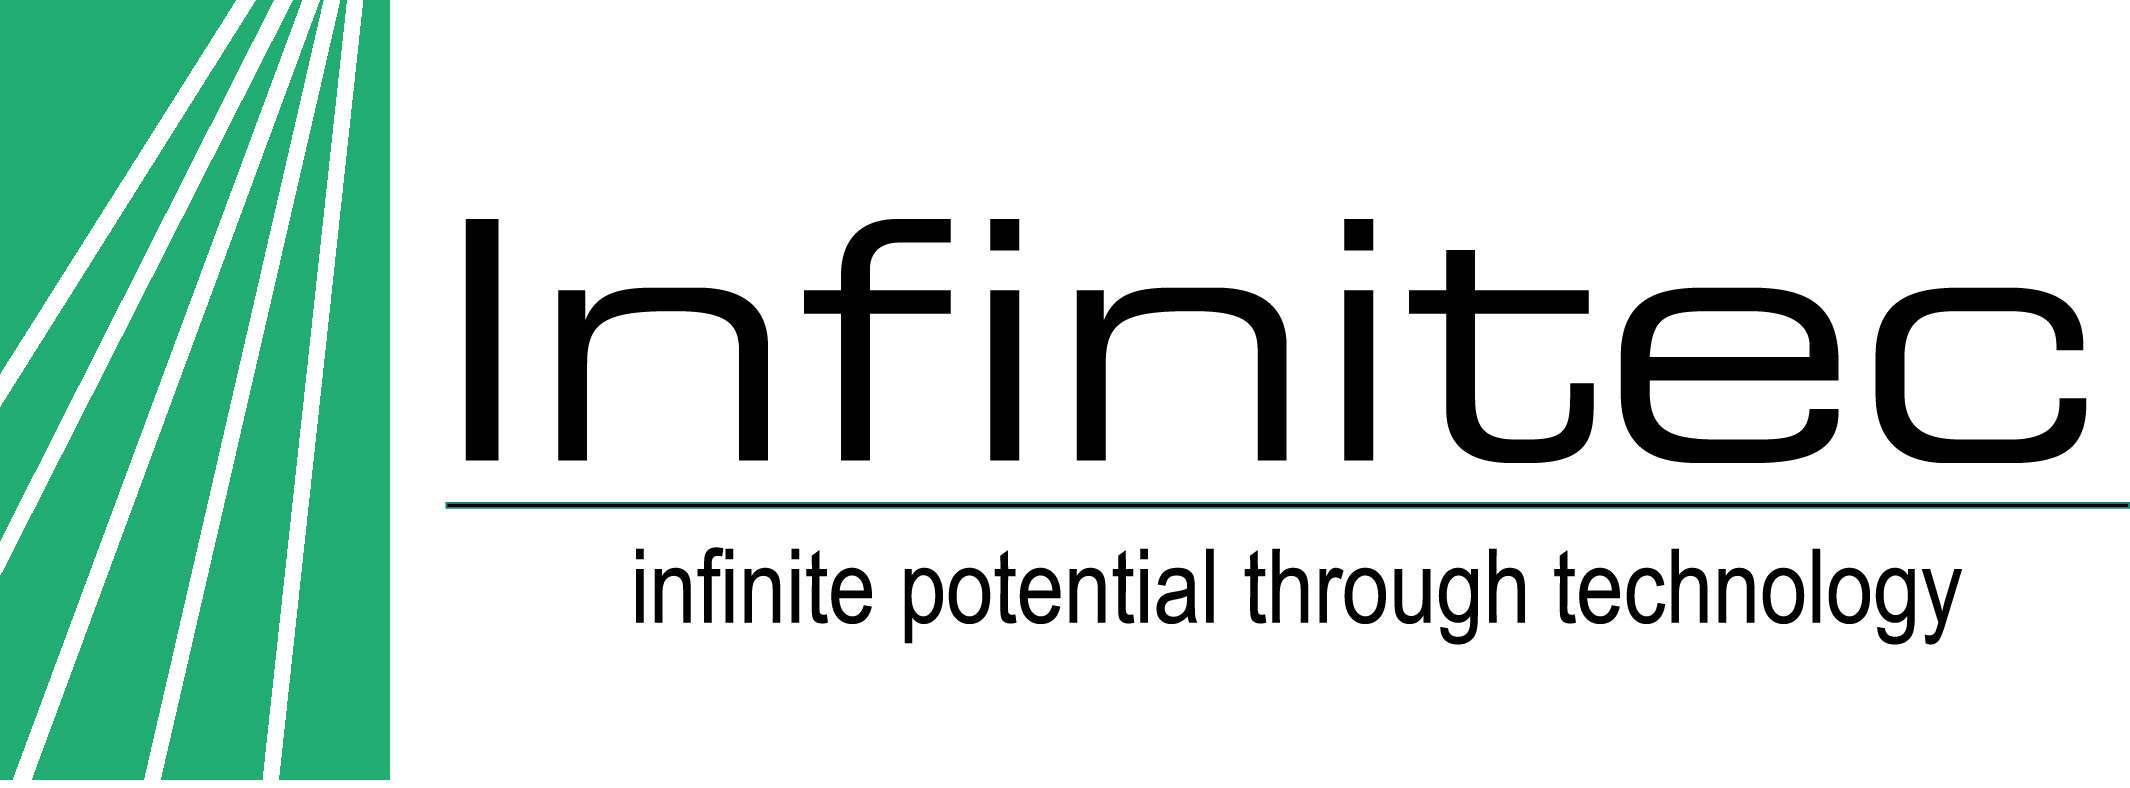 Infinitec Logo, turquoise rays, Infinite potential through technology